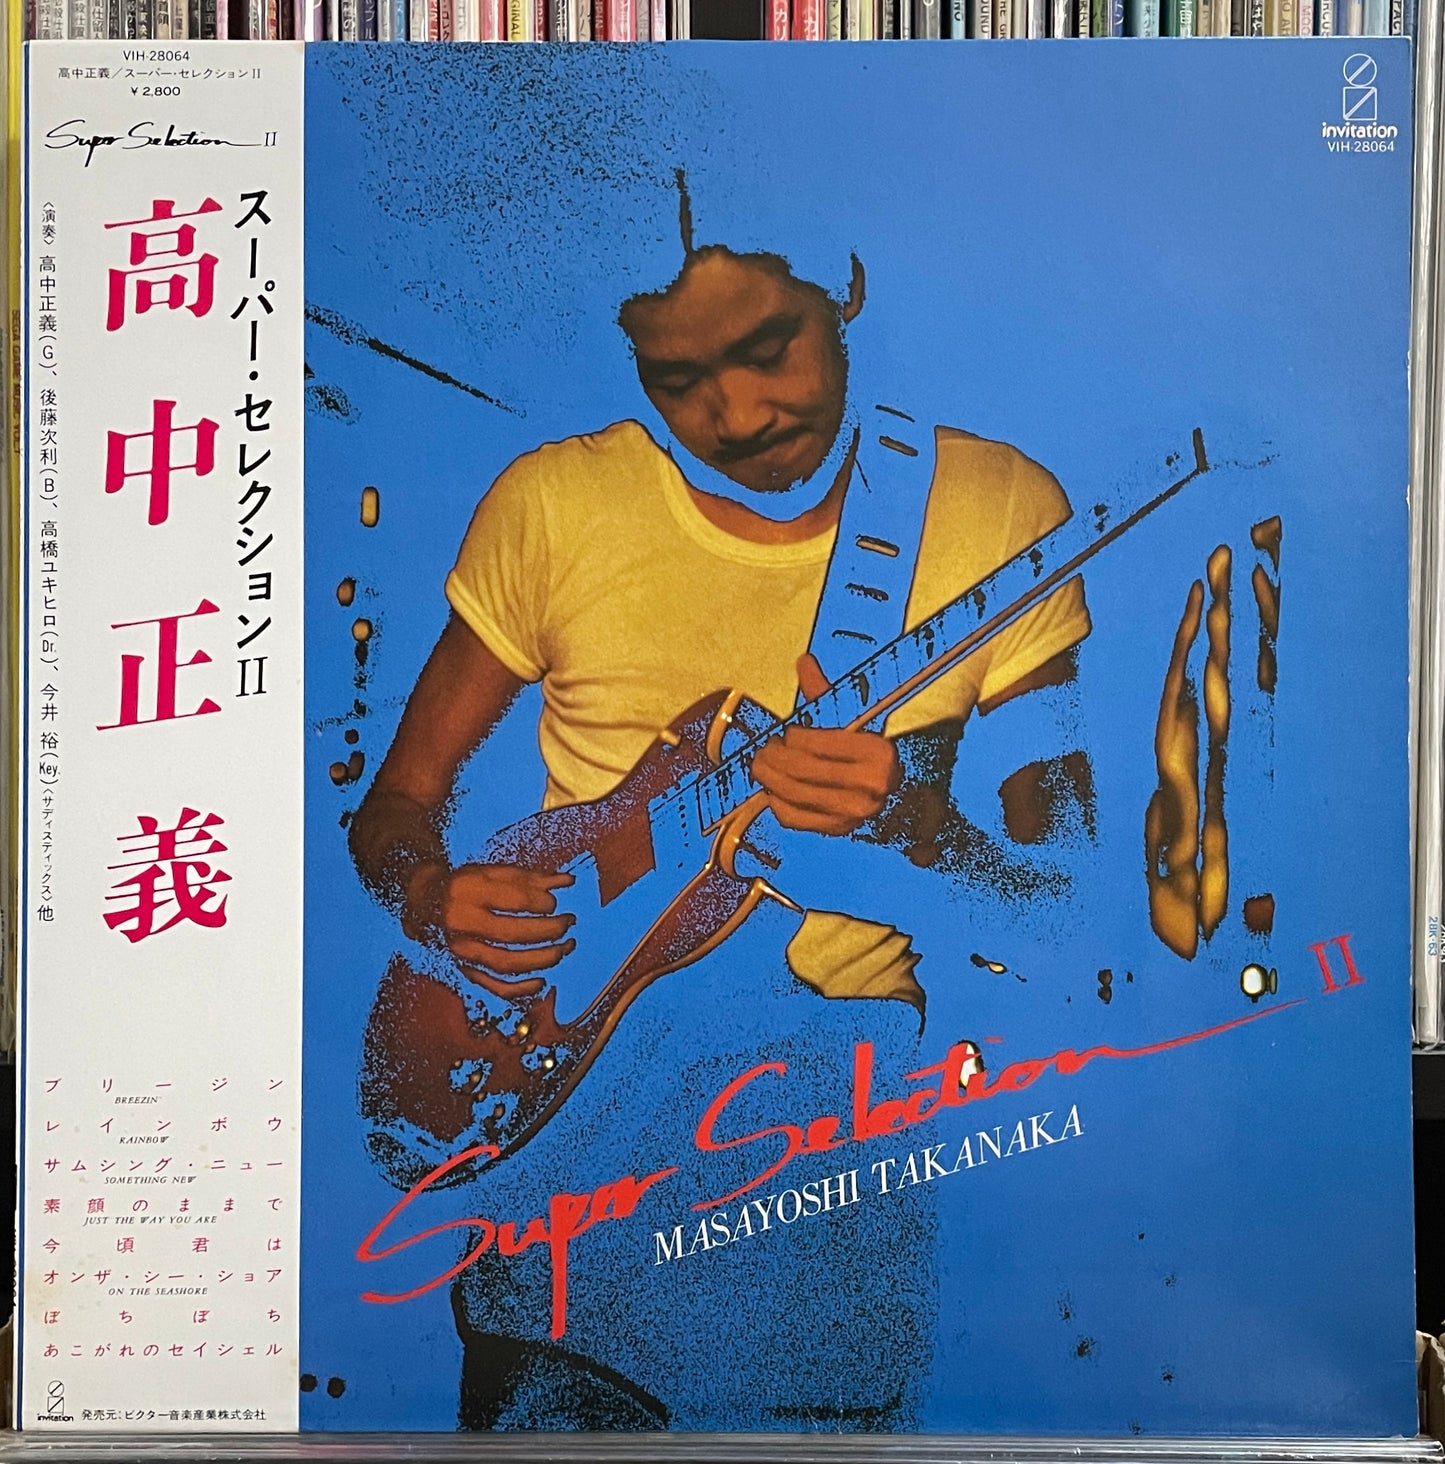 Masayoshi Takanaka “Super Selection II” (1981)